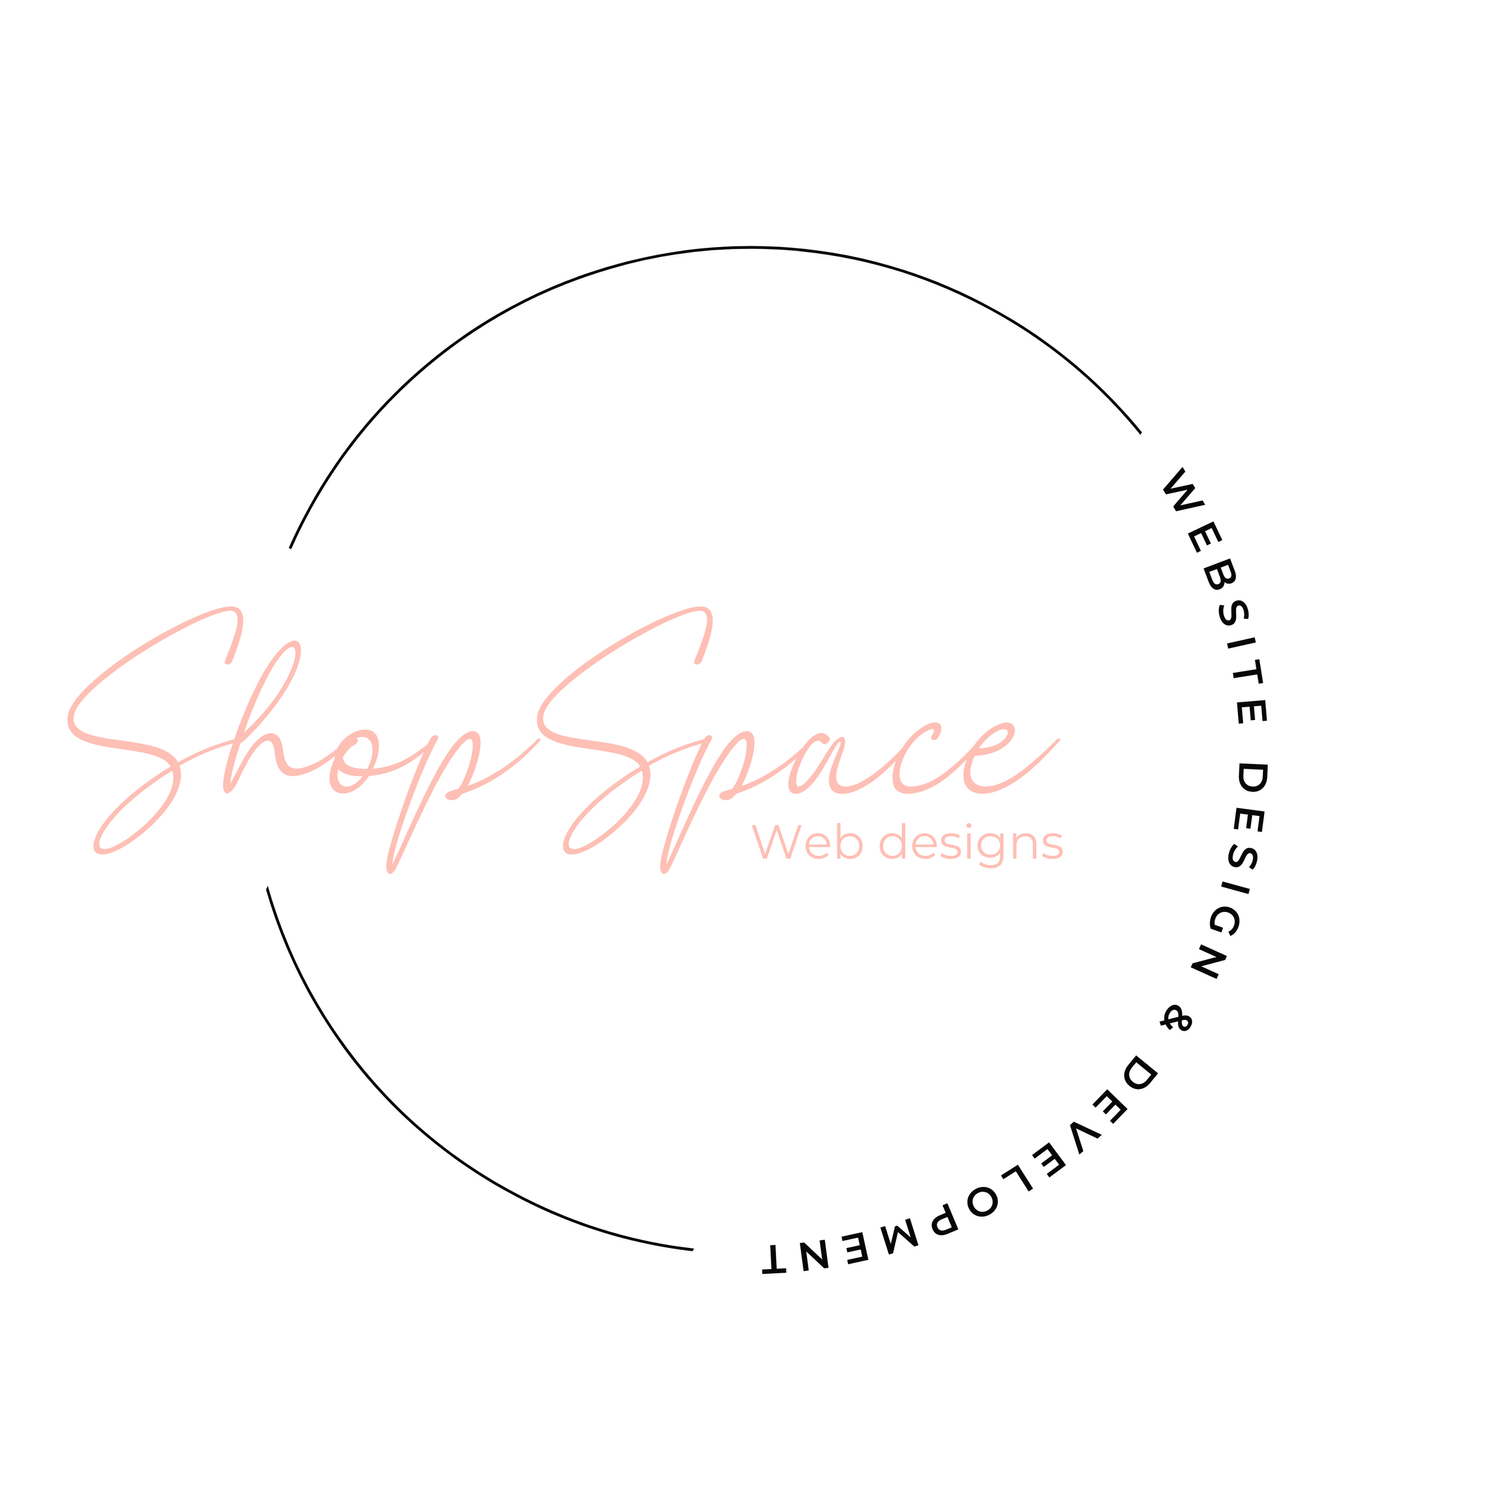 ShopSpace Web Designs